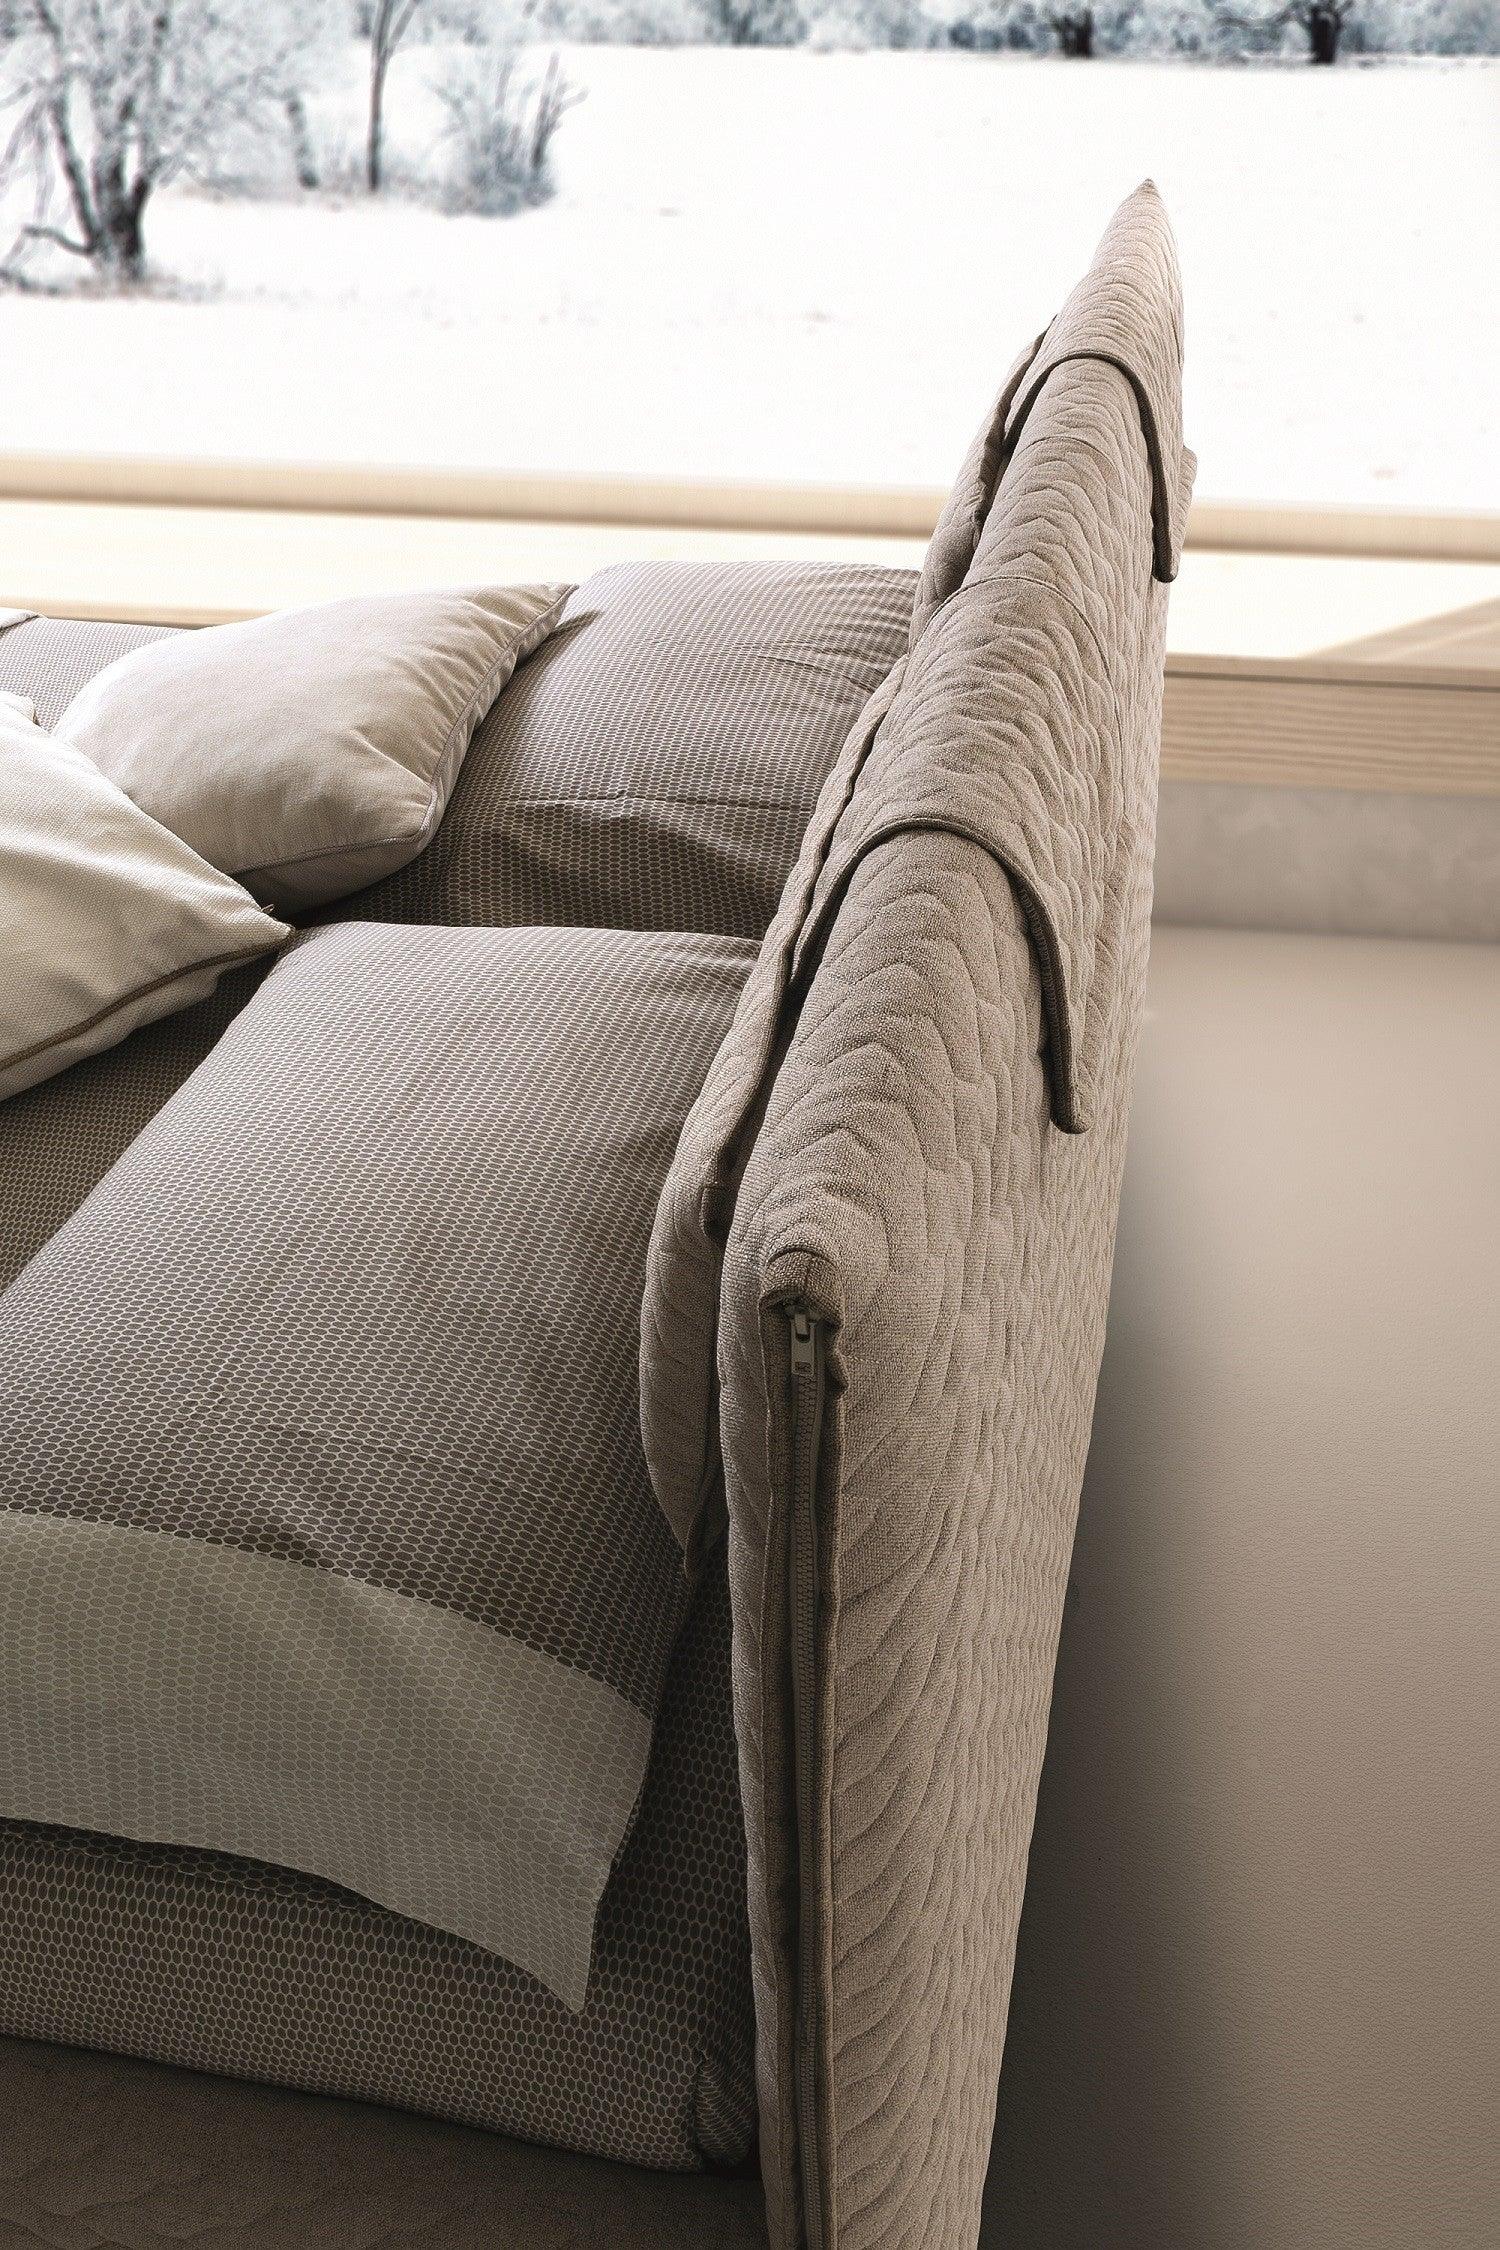 Everly Premium Bed - Euro Living Furniture